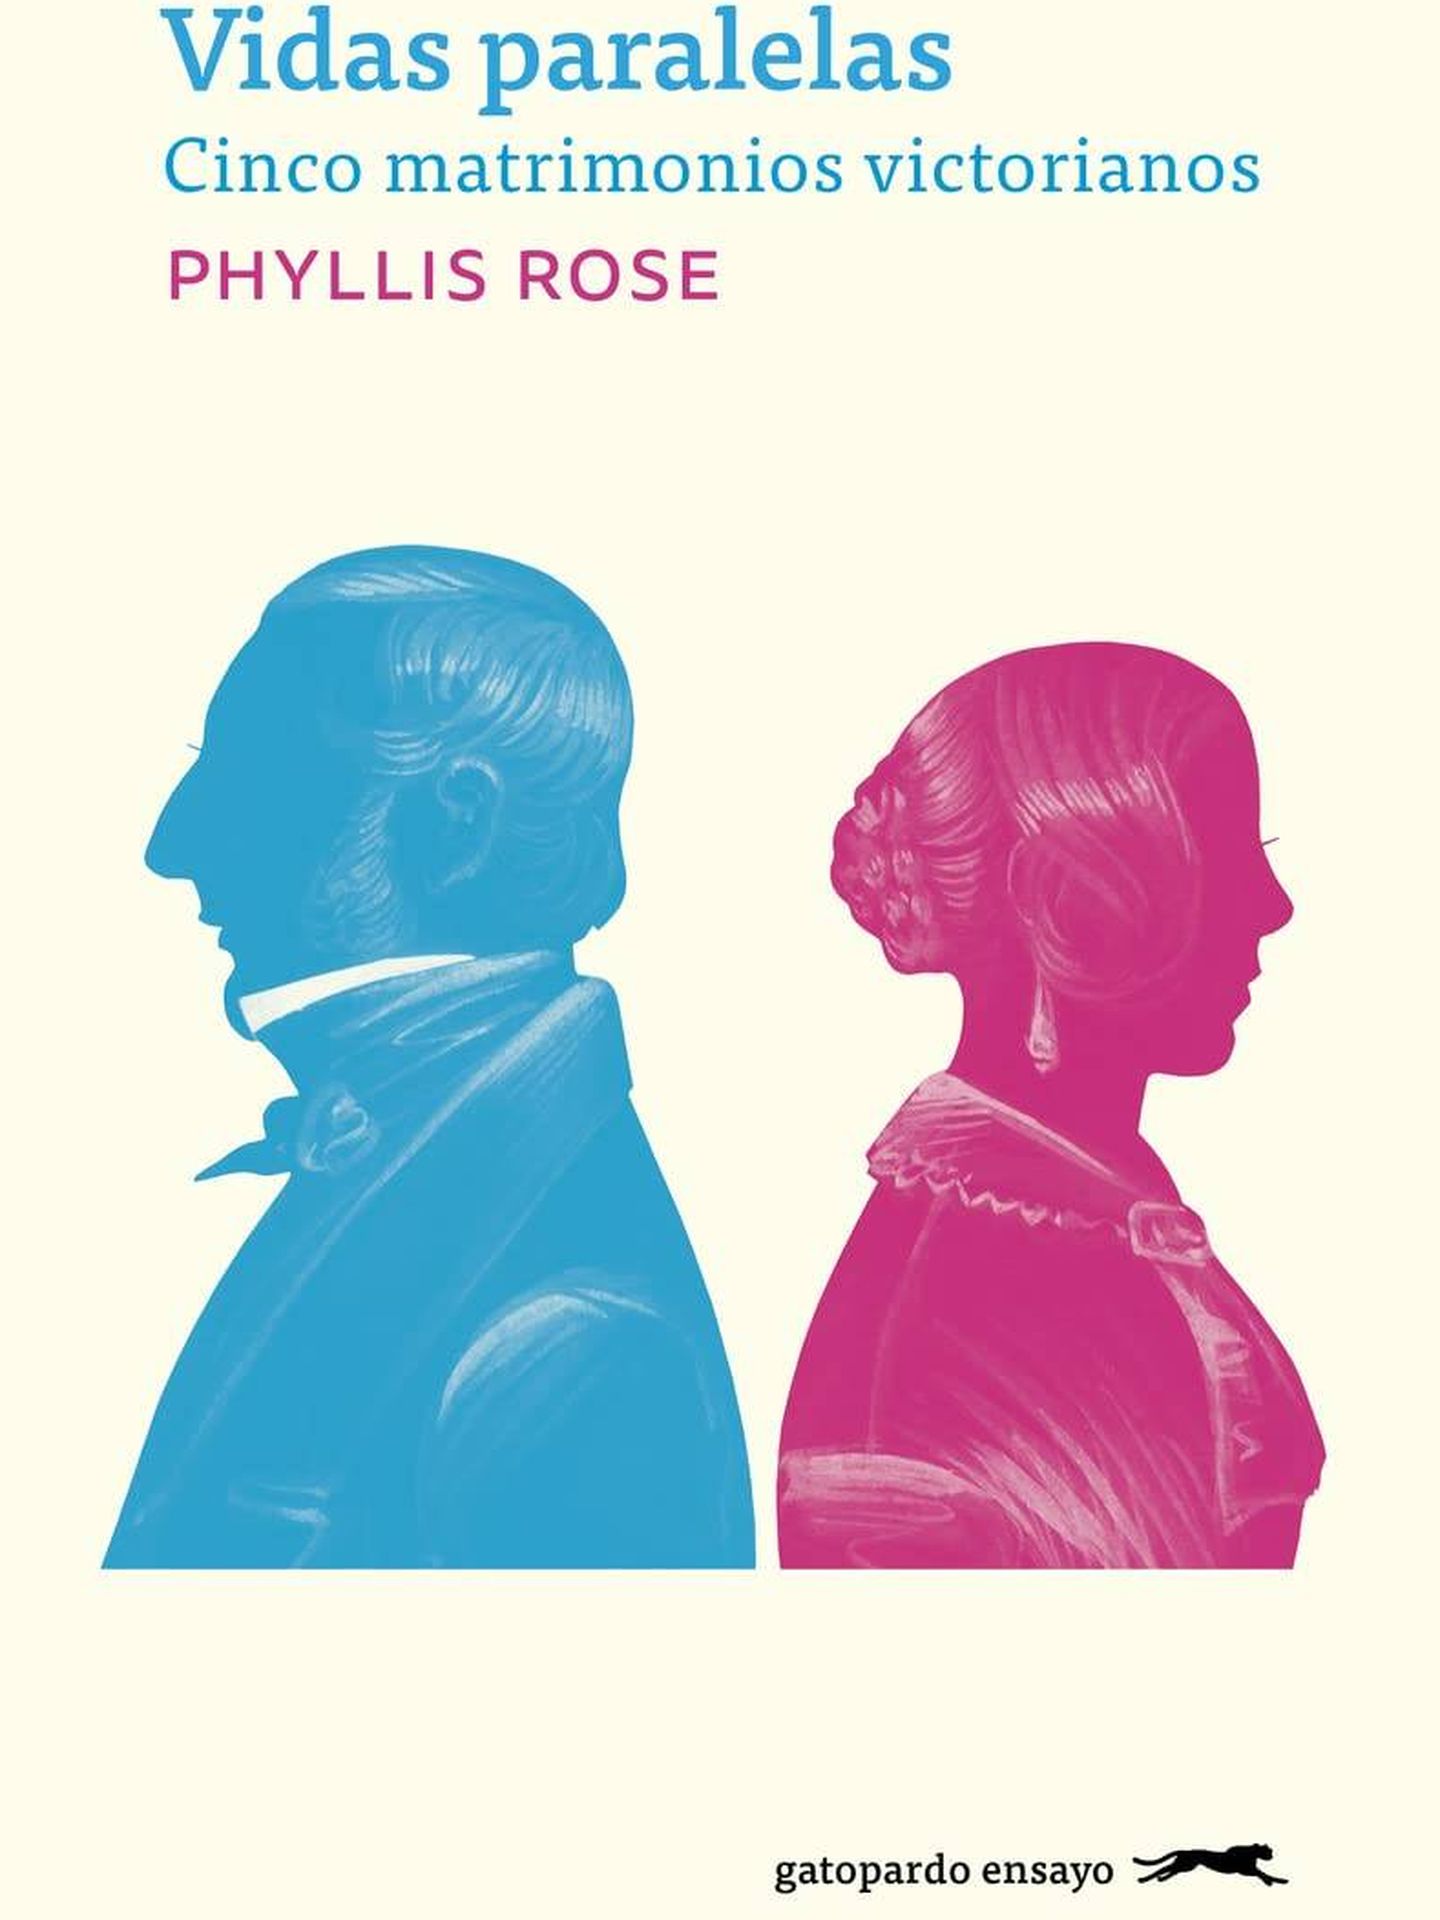 Portada de 'Vidas paralelas. Cinco matrimonios victorianos', de Phyllis Rose.